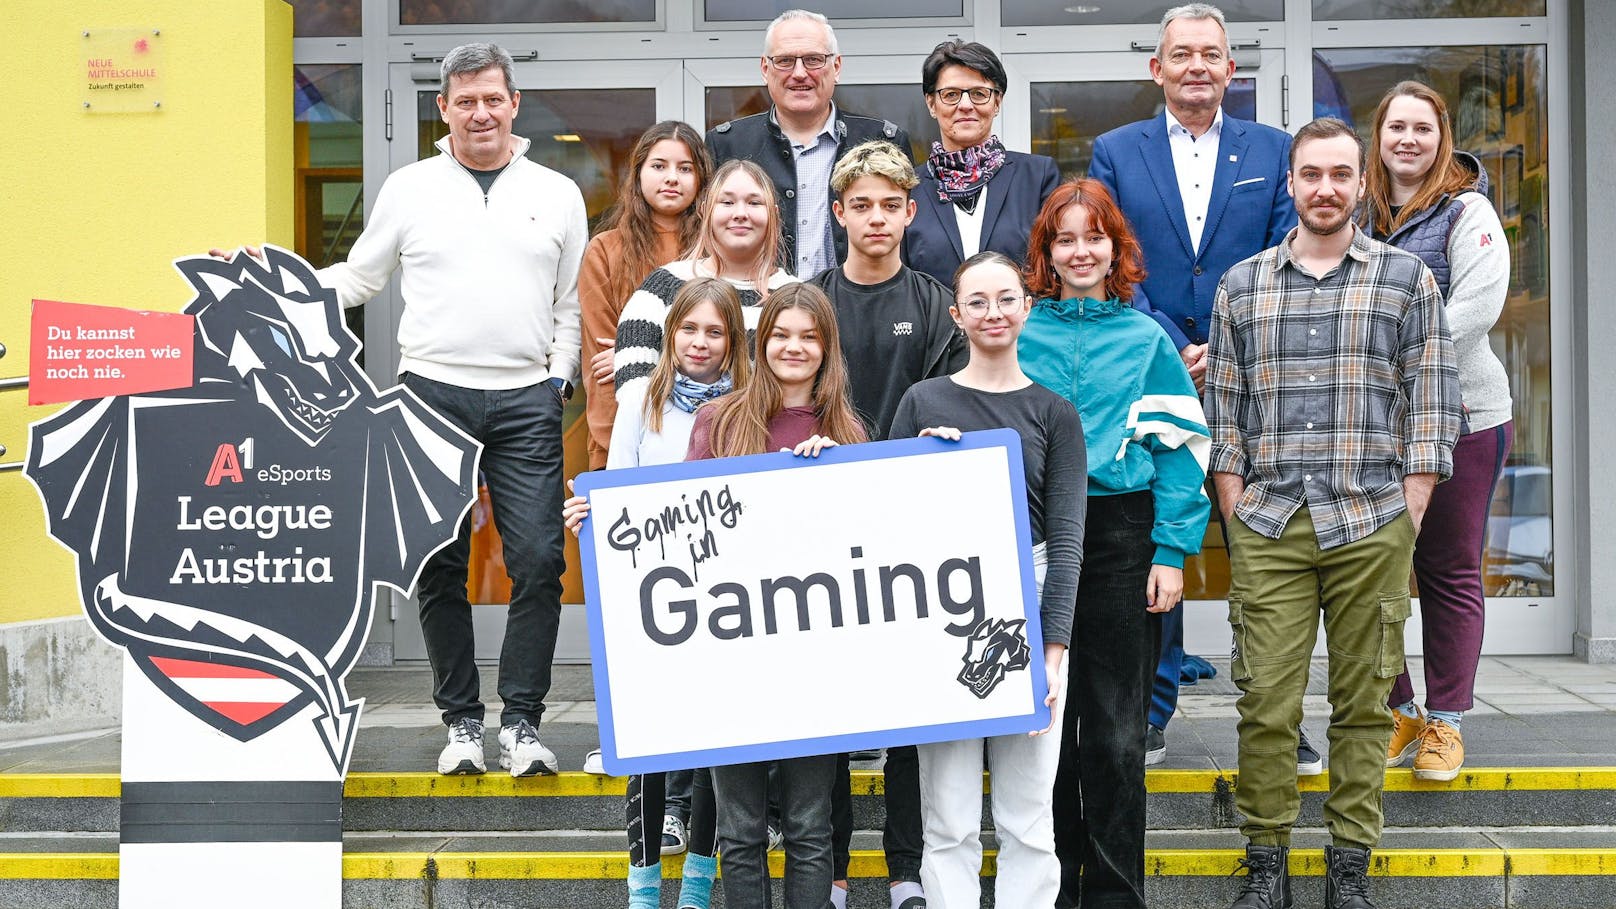 A1 bringt "Gaming nach Gaming": Schüler:innen entdecken die Welt des E-Sports.